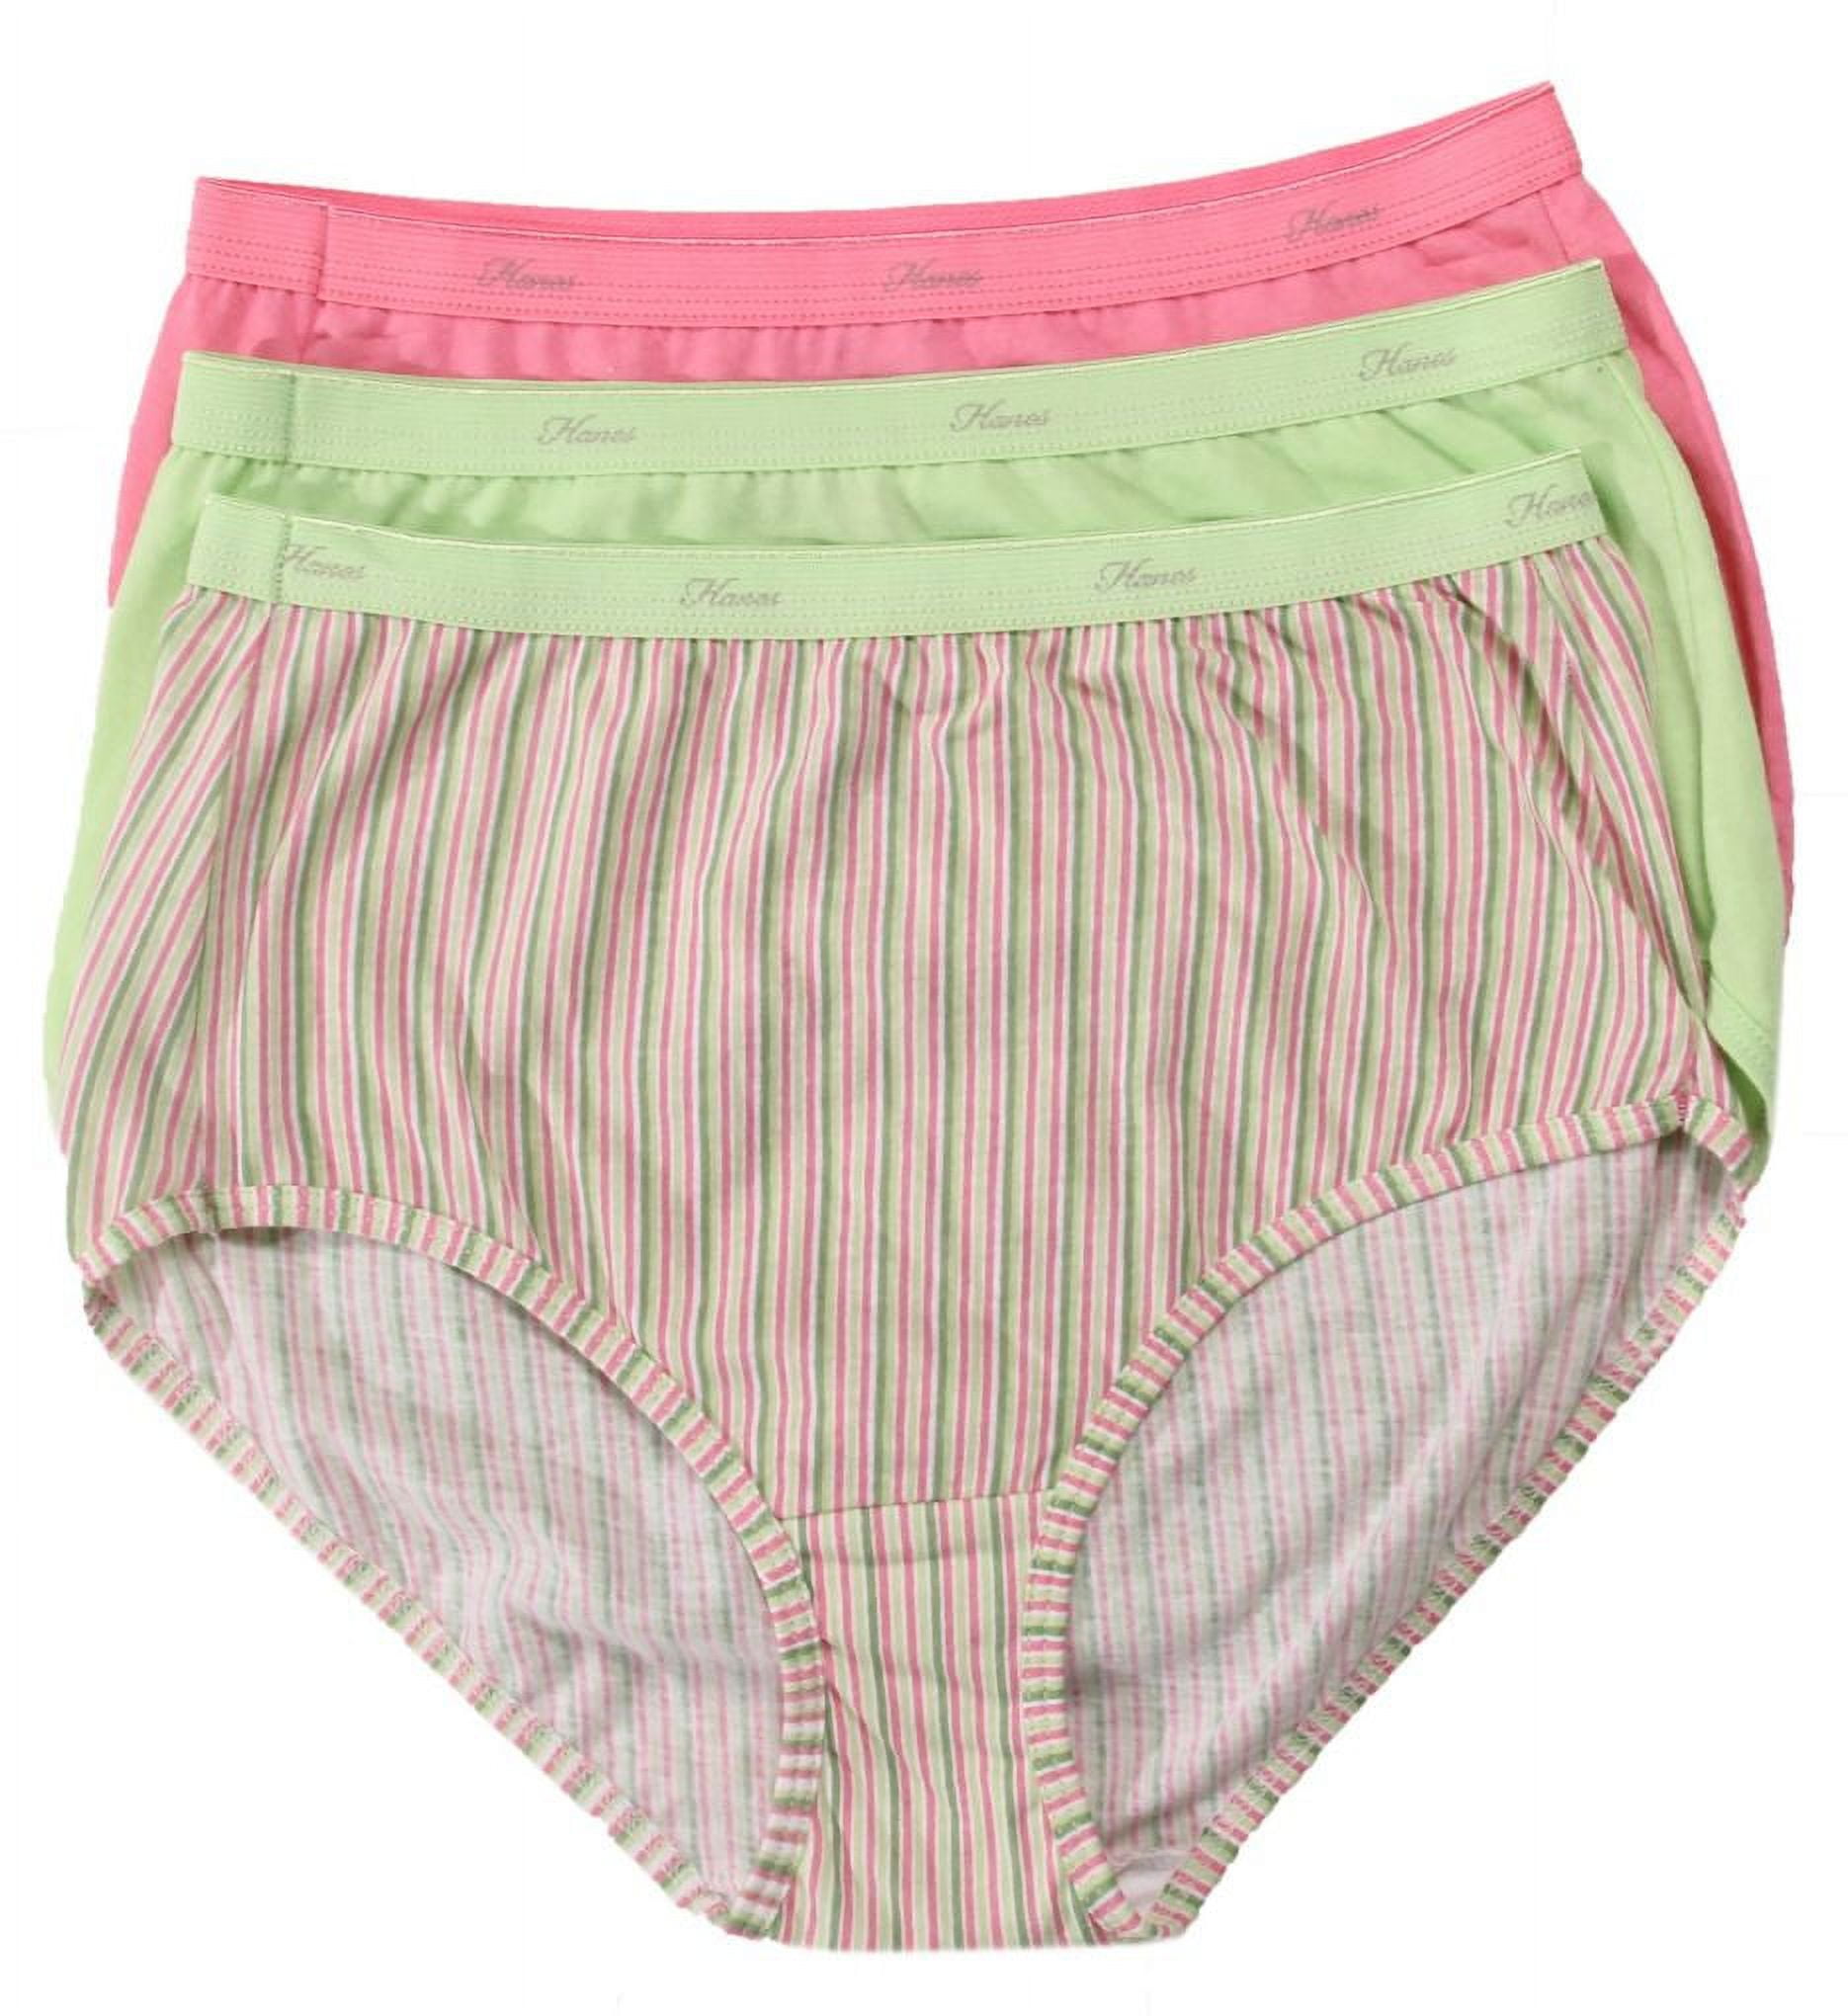 Hanes Women's assorted cotton brief panties - 3 pack 